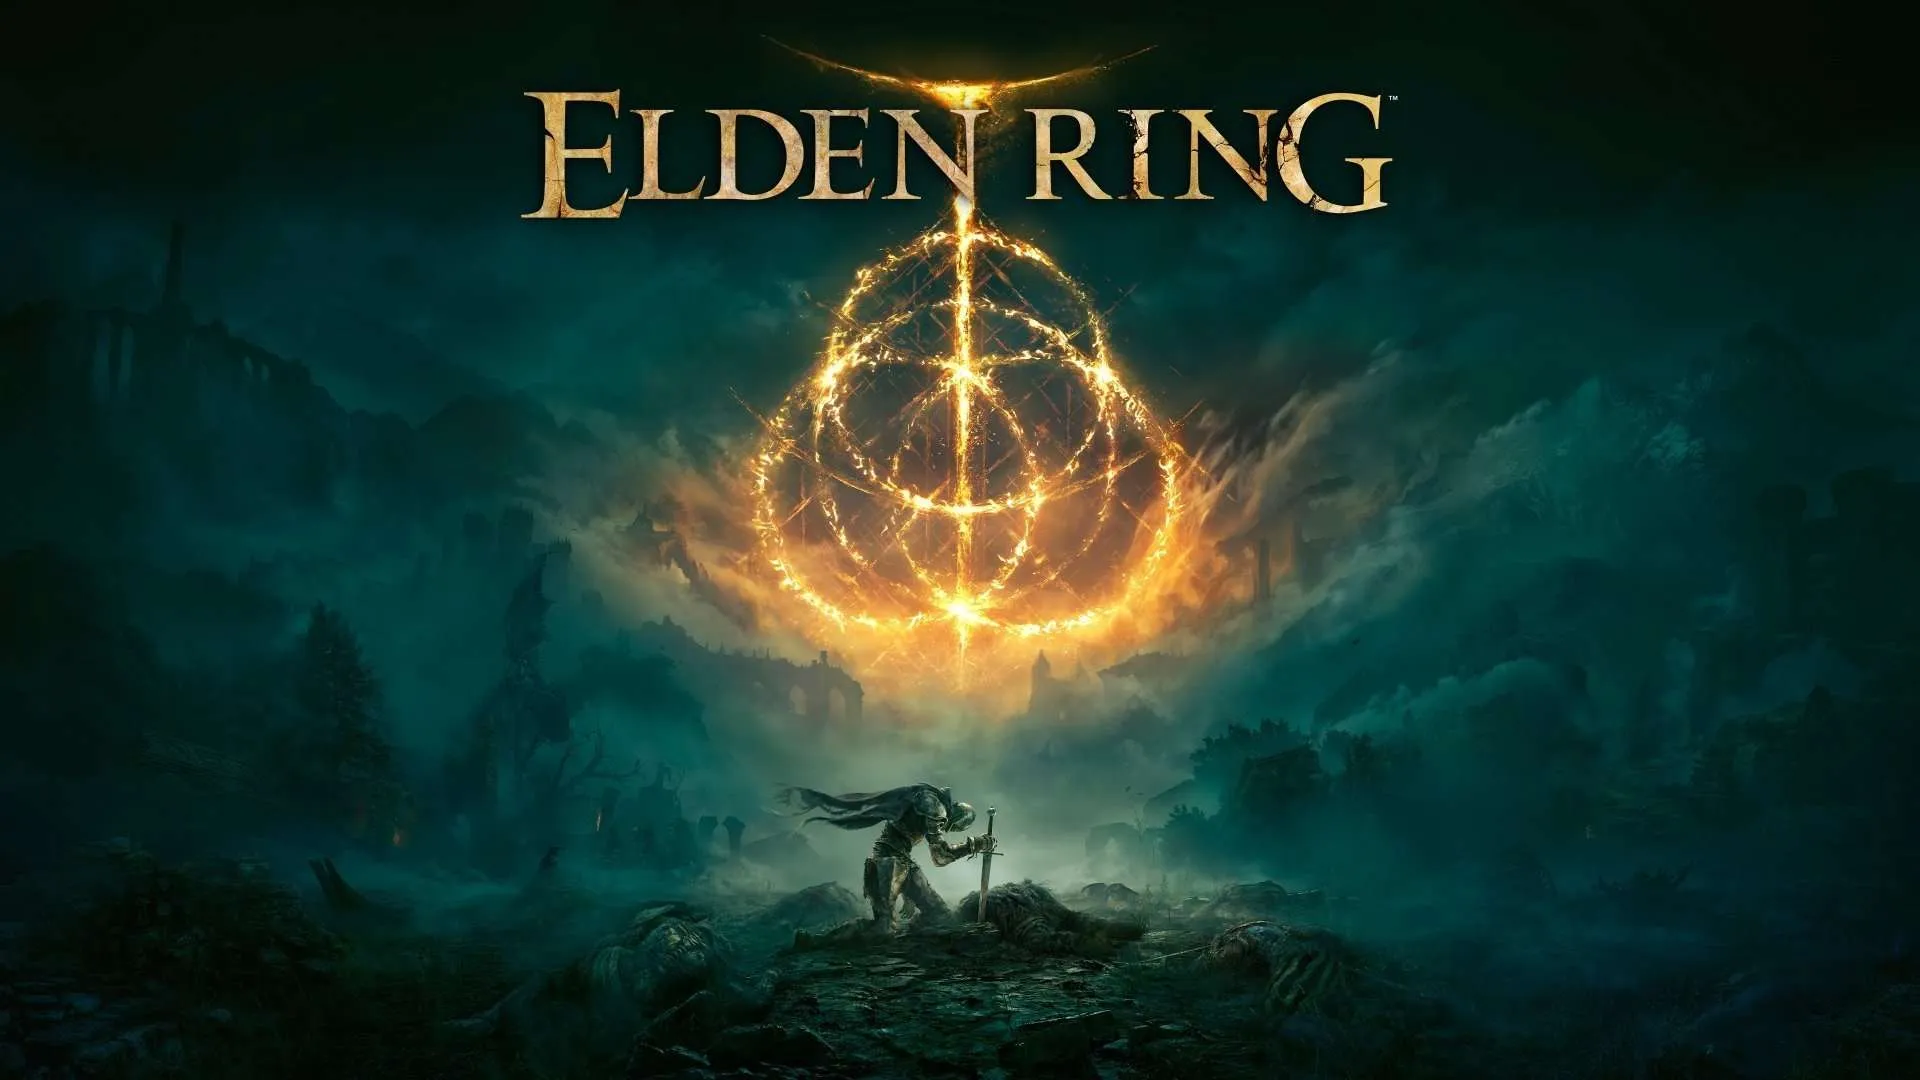 Why Elden Ring won Game of the Year over God of War: Ragnarök